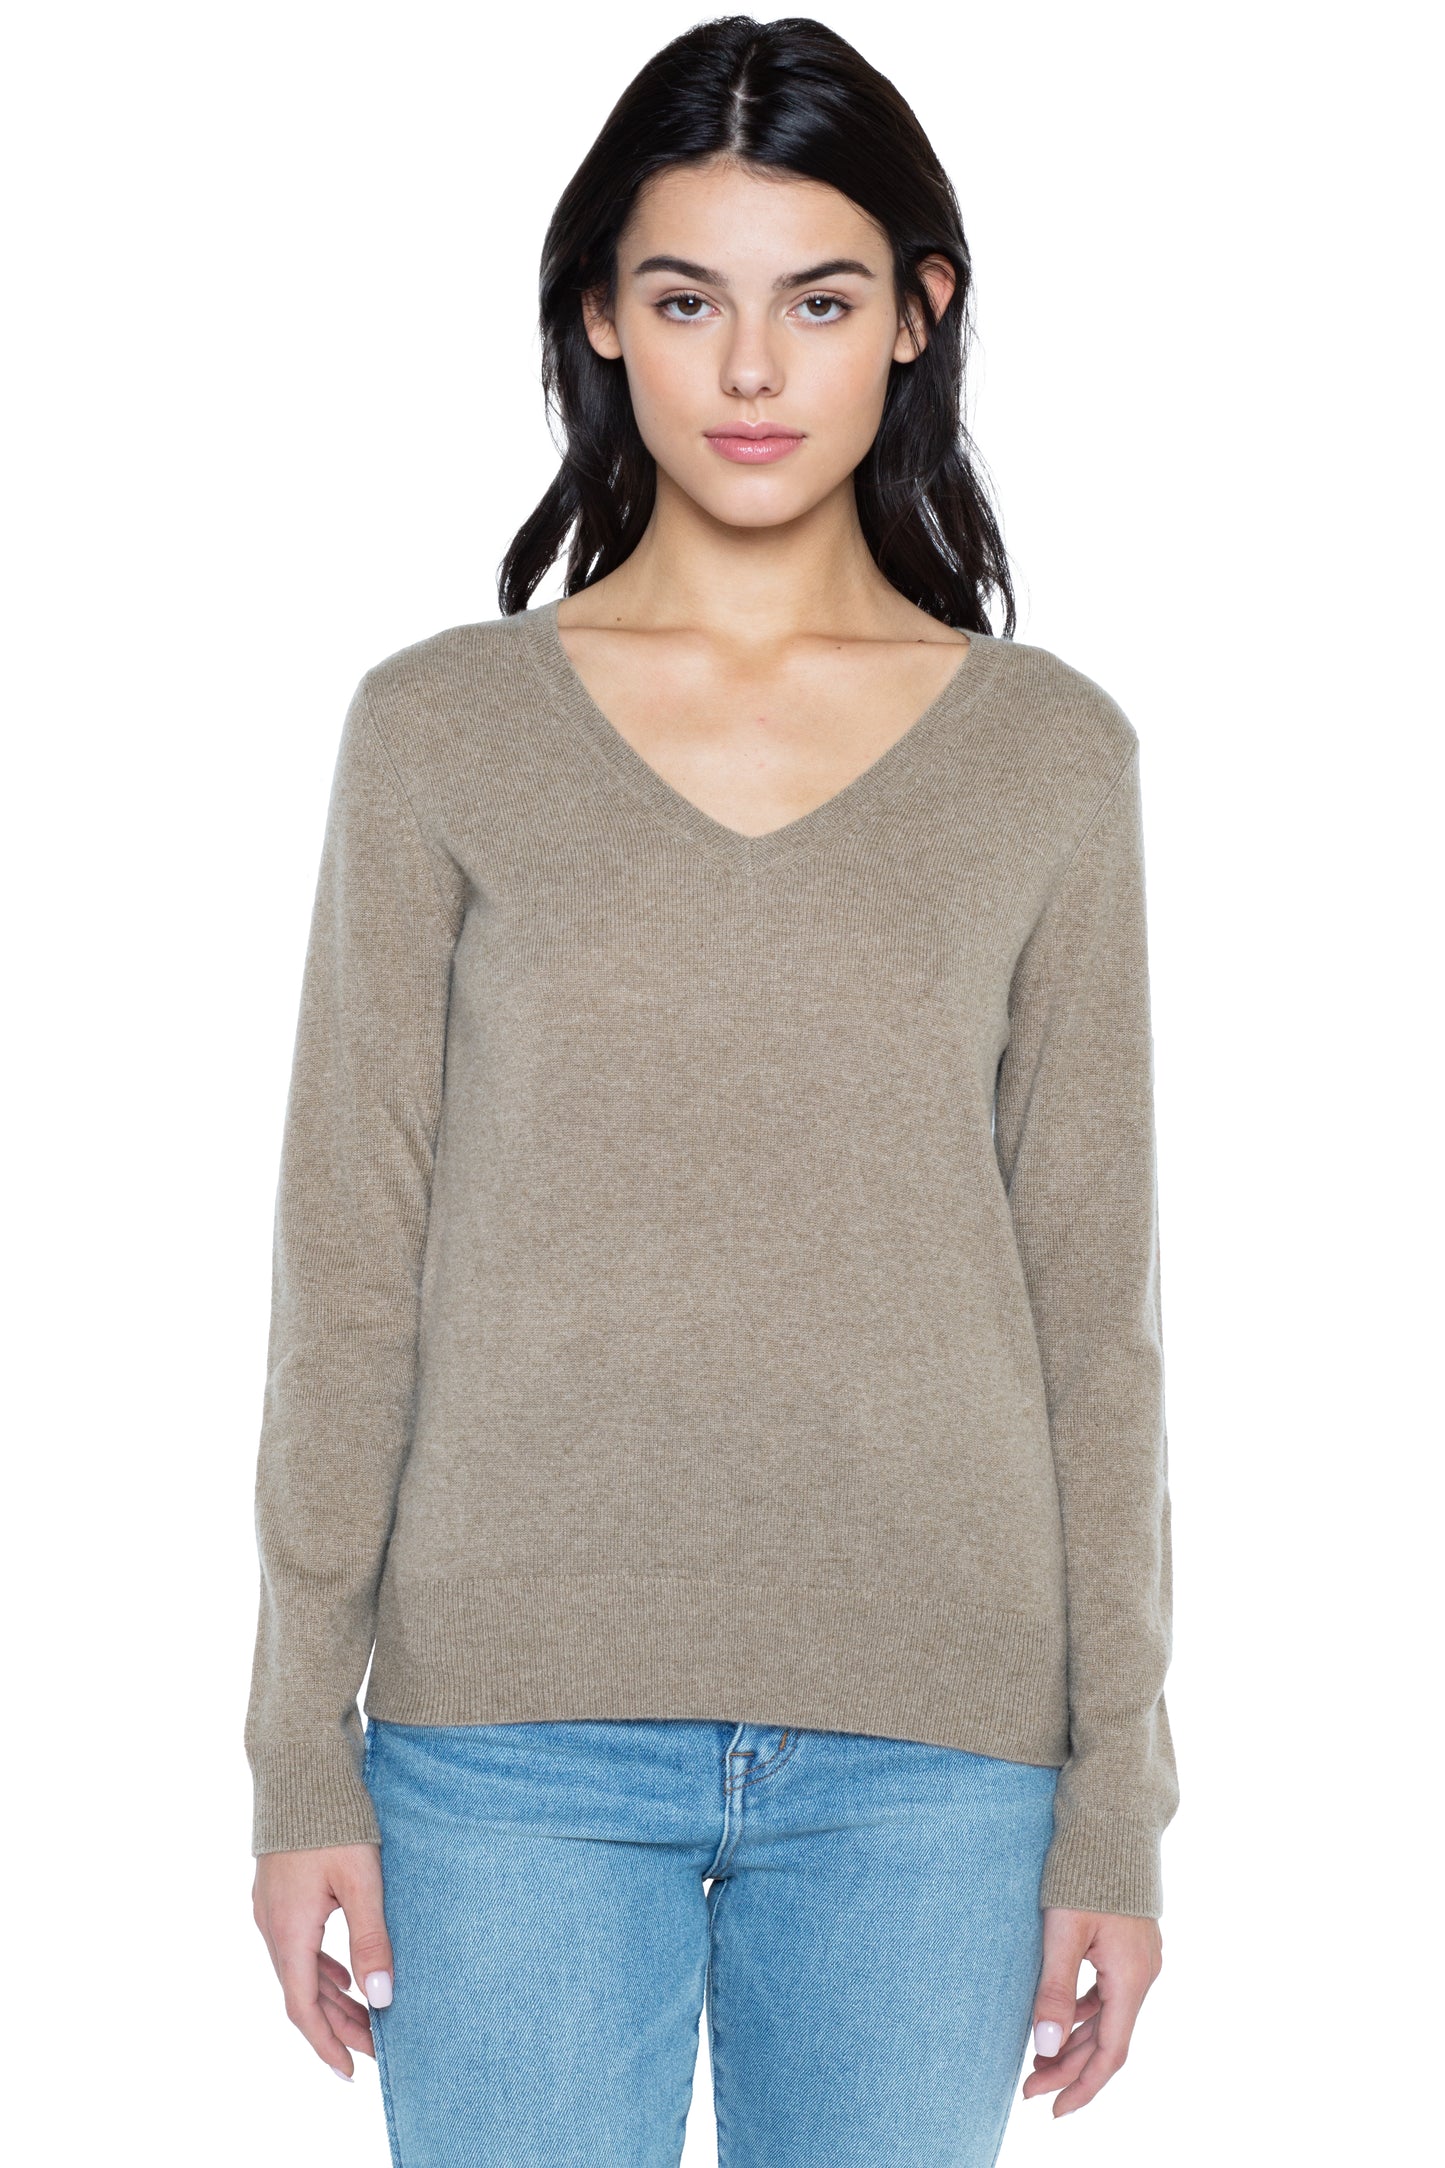 JENNIE LIU Women's 100% Pure Cashmere Long Sleeve Pullover V Neck Sweater